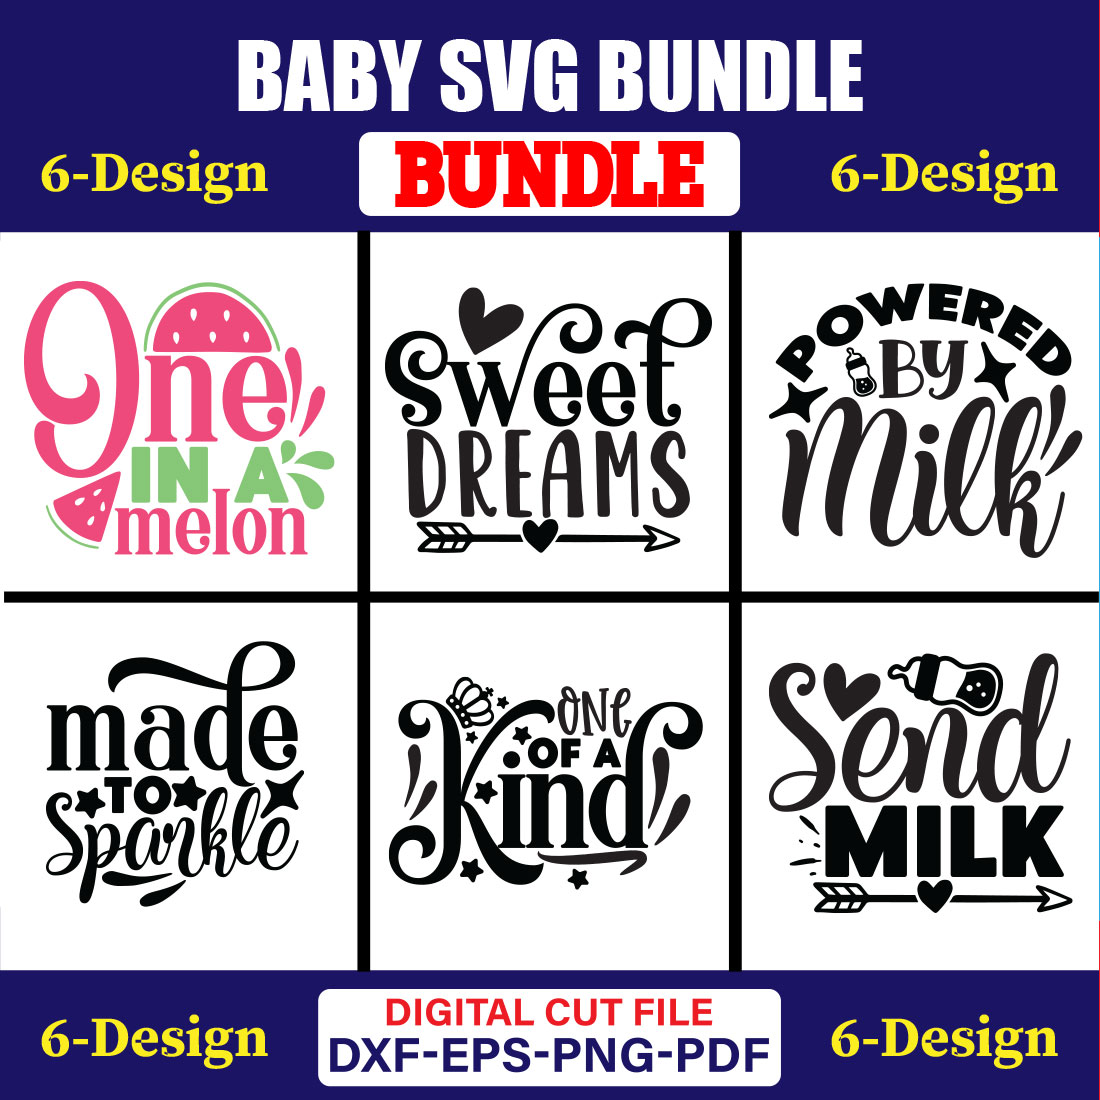 Zombie Z Letter Sticker Line PNG & SVG Design For T-Shirts